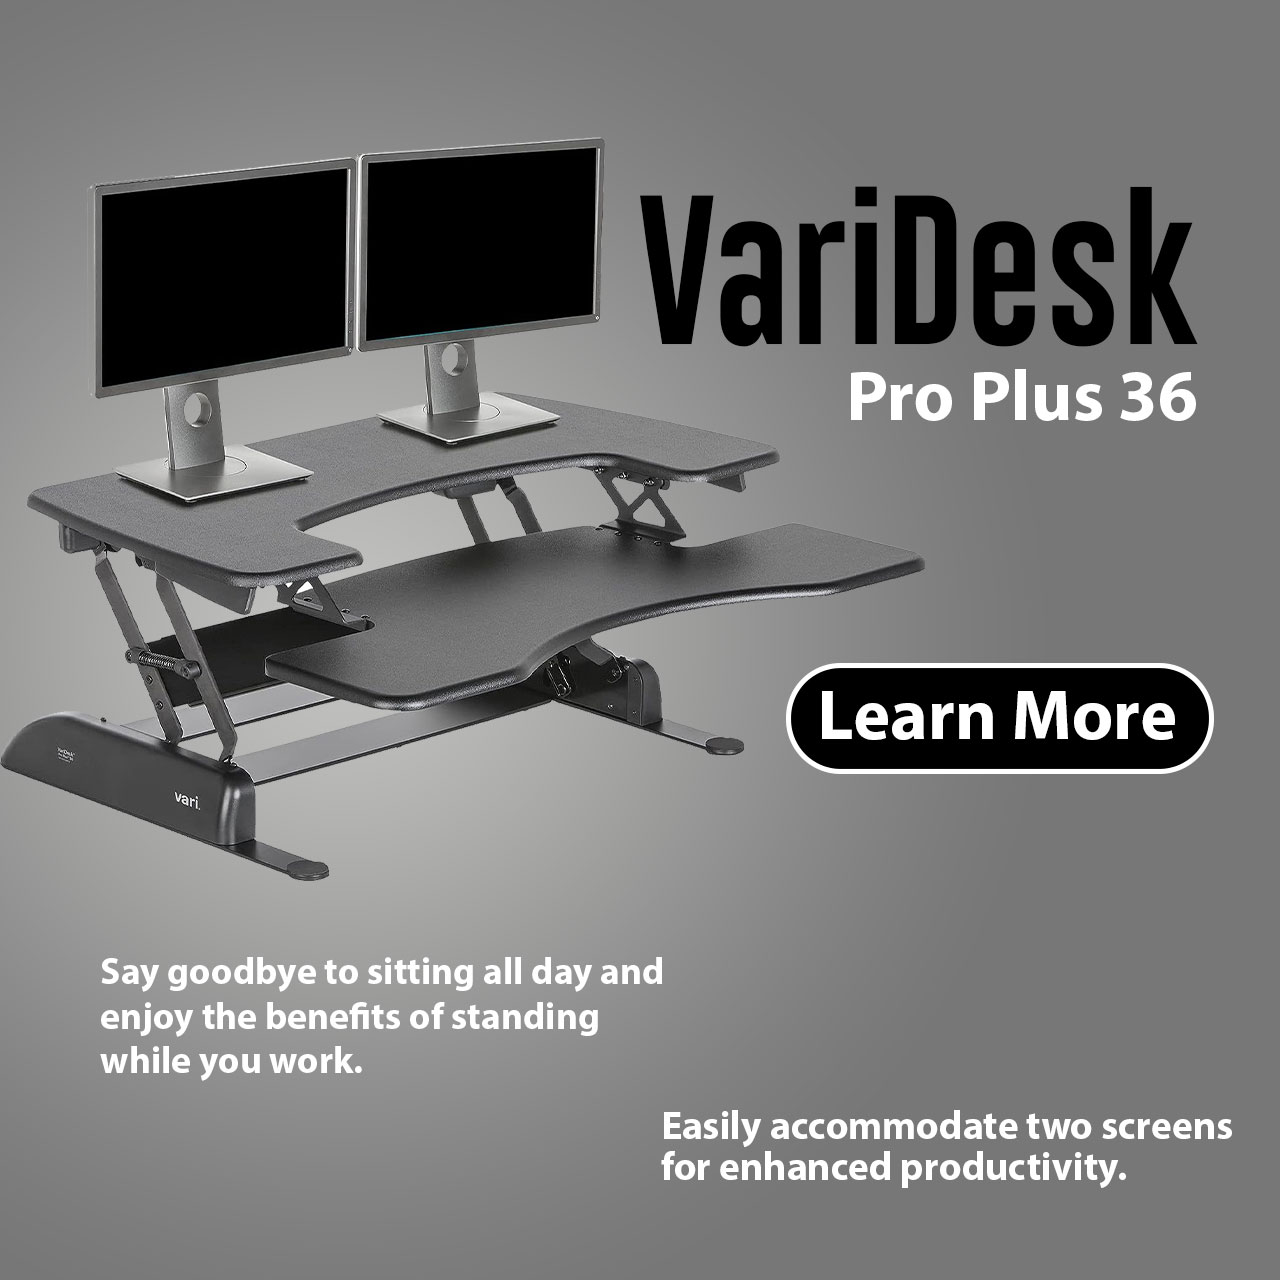 VariDesk Pro Plus 36: Elevating Your Work Experience